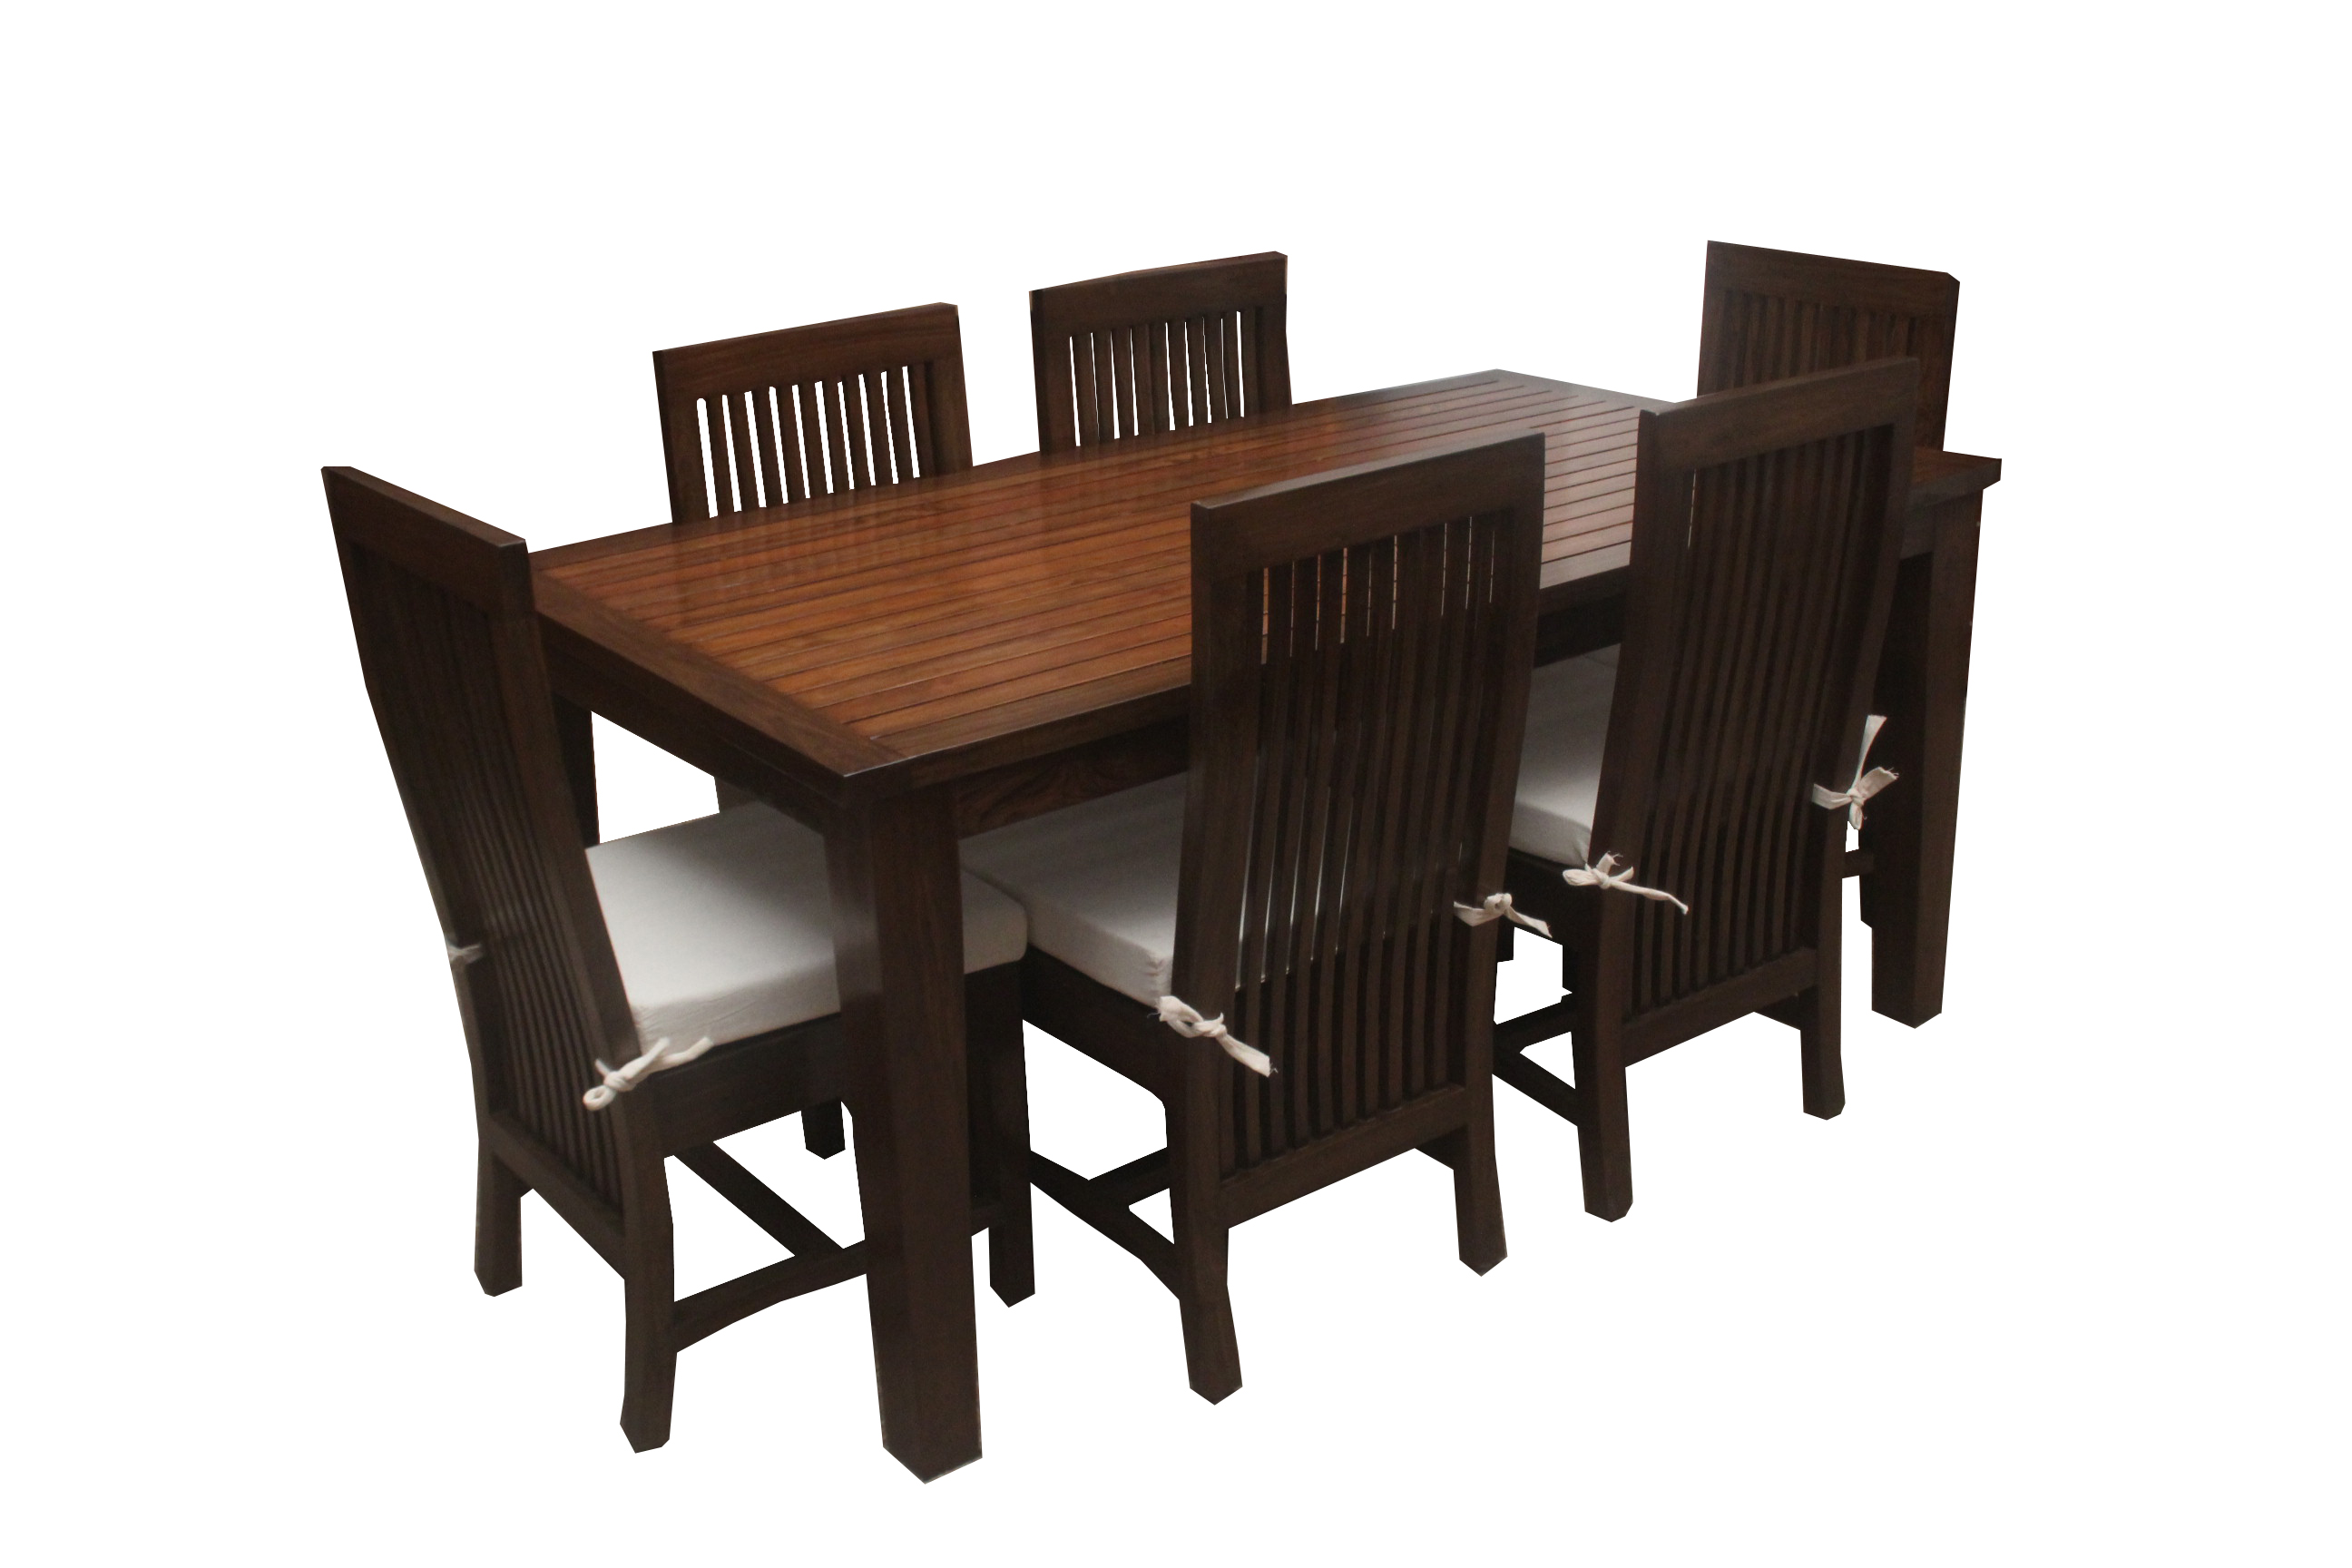 6 Seater Teakwood Dining Set Twd 104 Details Bic Furniture India